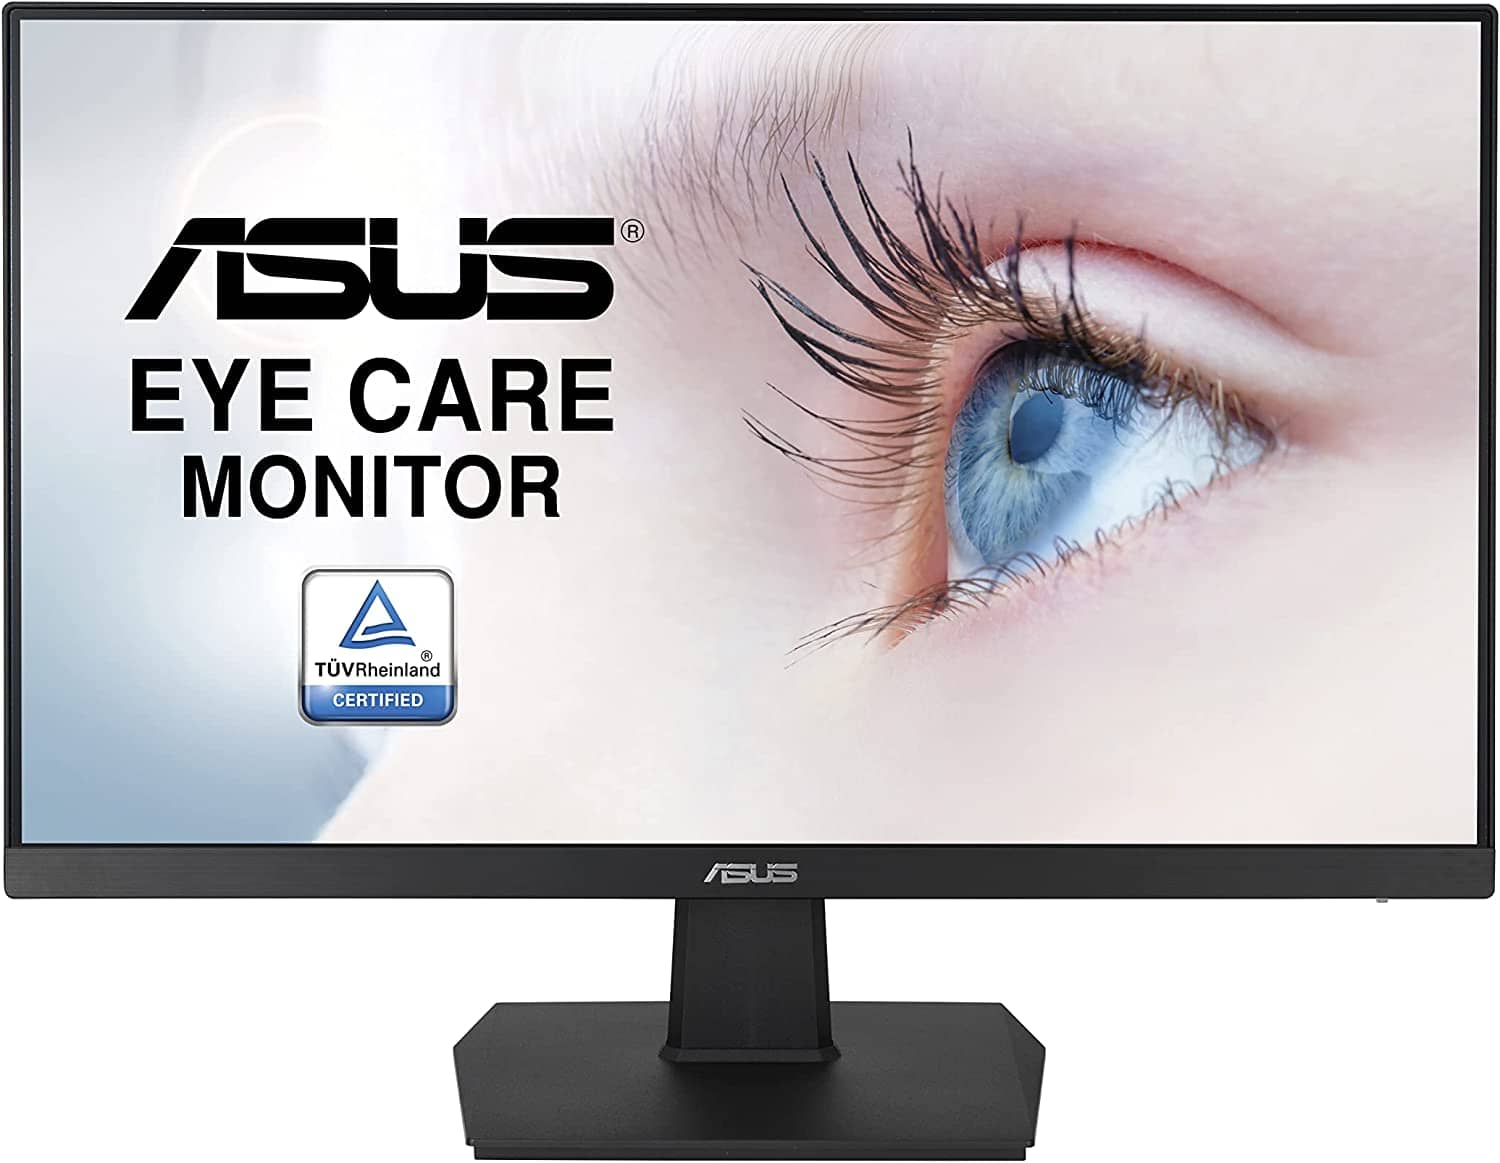 ASUS Eye Care Monitor